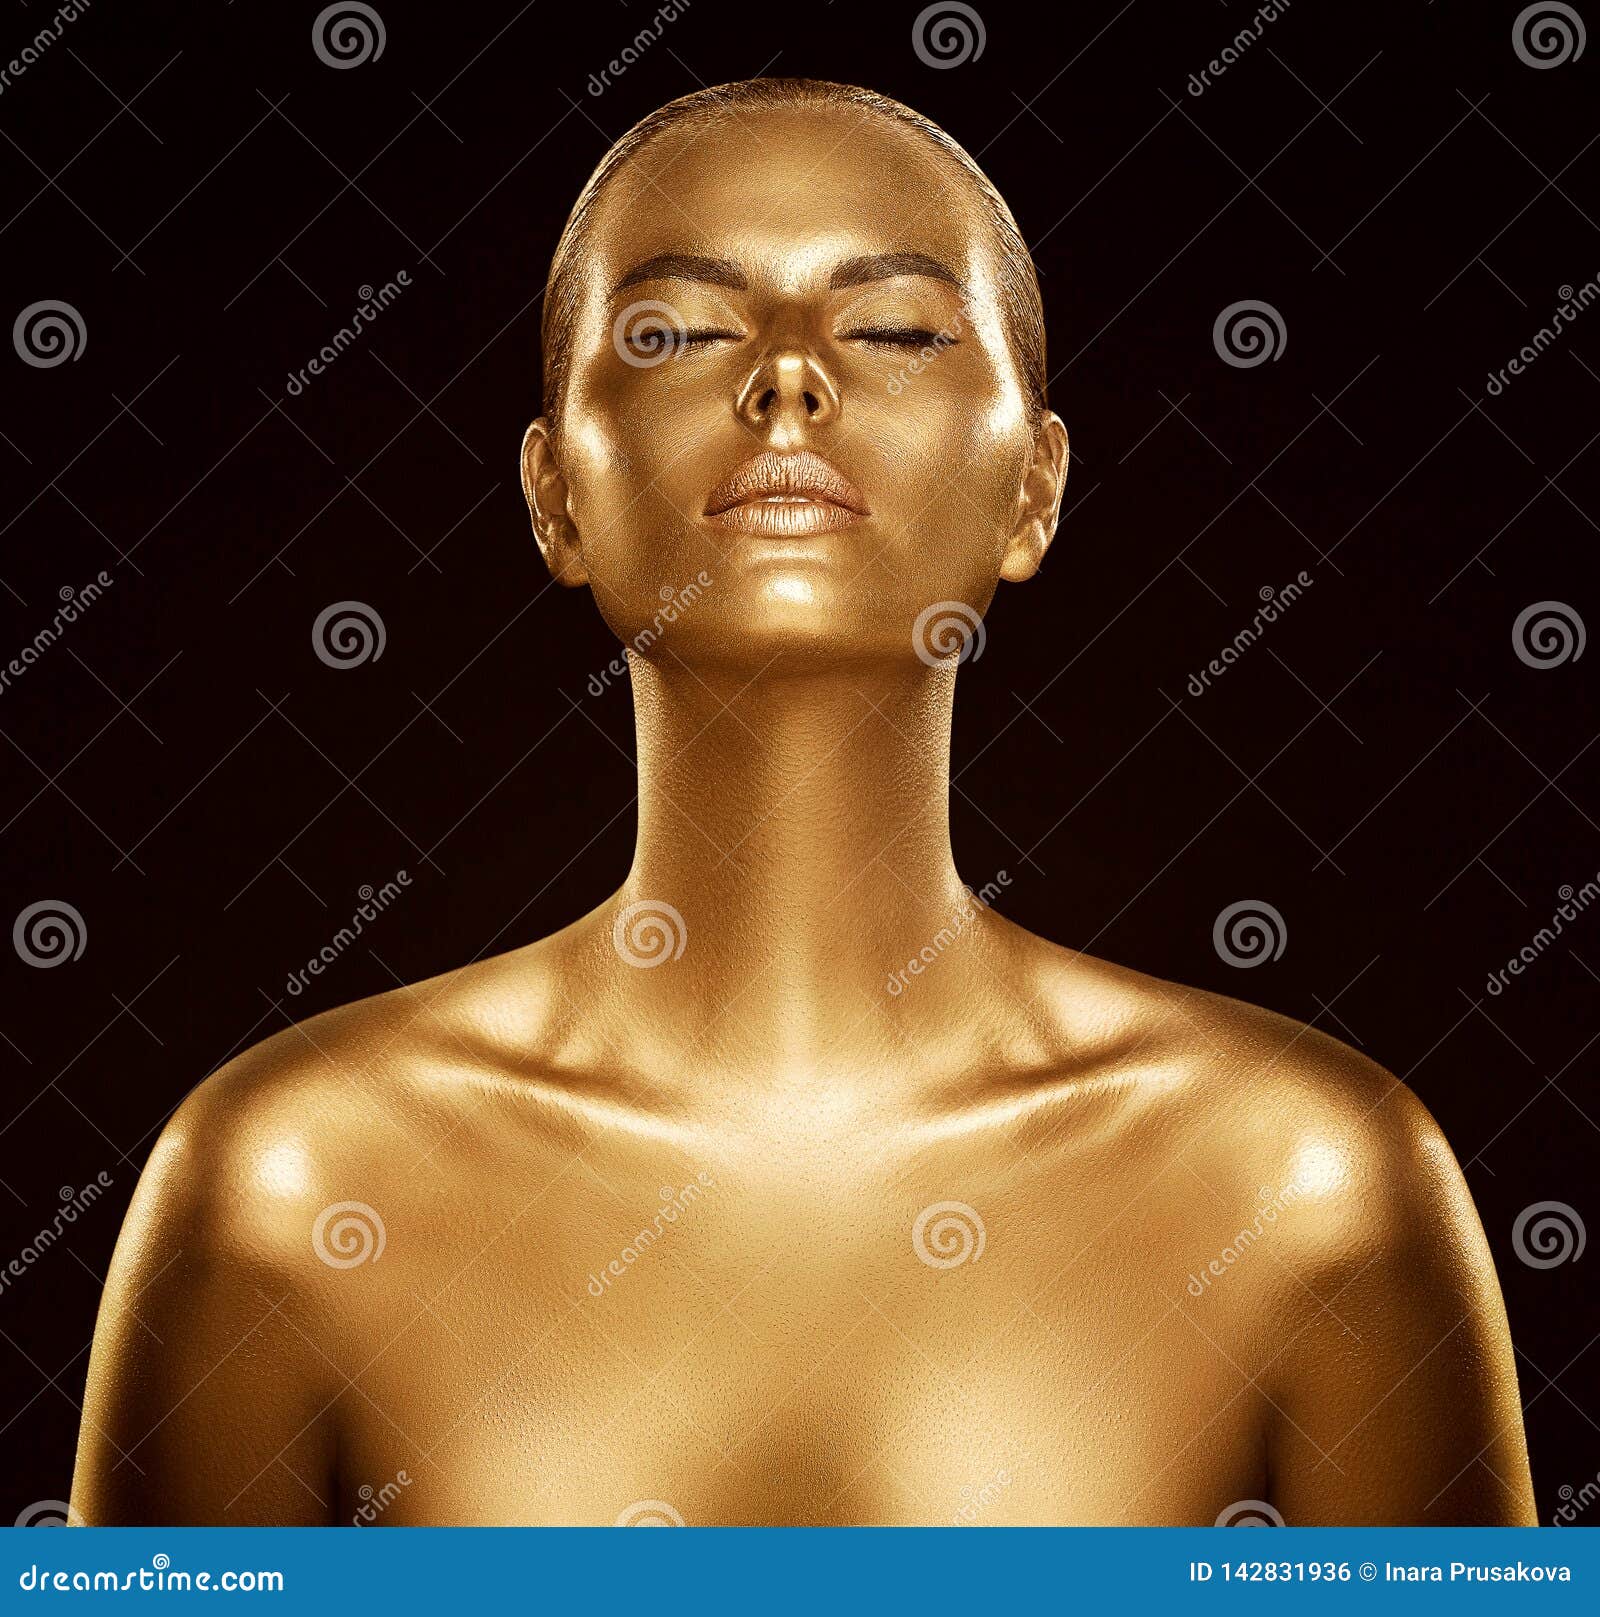 woman gold skin, fashion model golden body art, beauty portrait face and body shine as metal